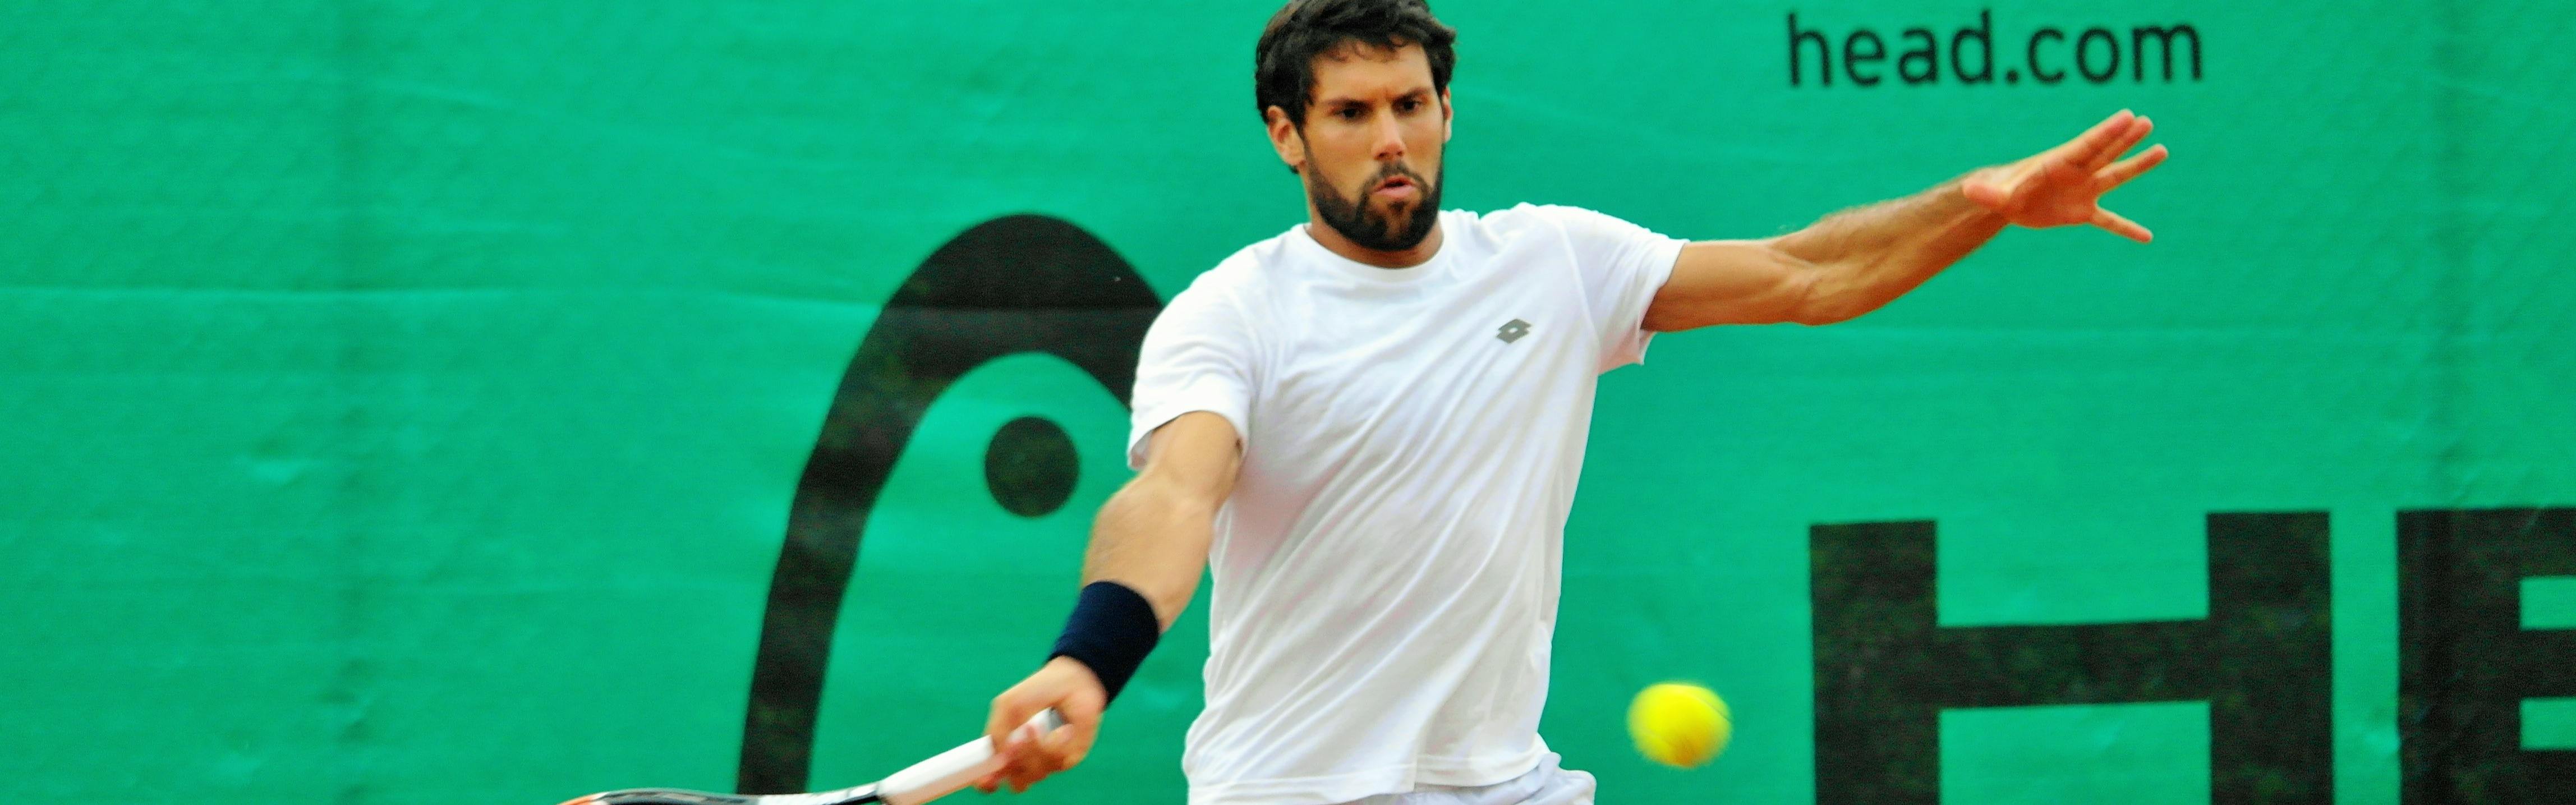 A tennis player wearing a lotto brand shirt hitting a tennis ball.